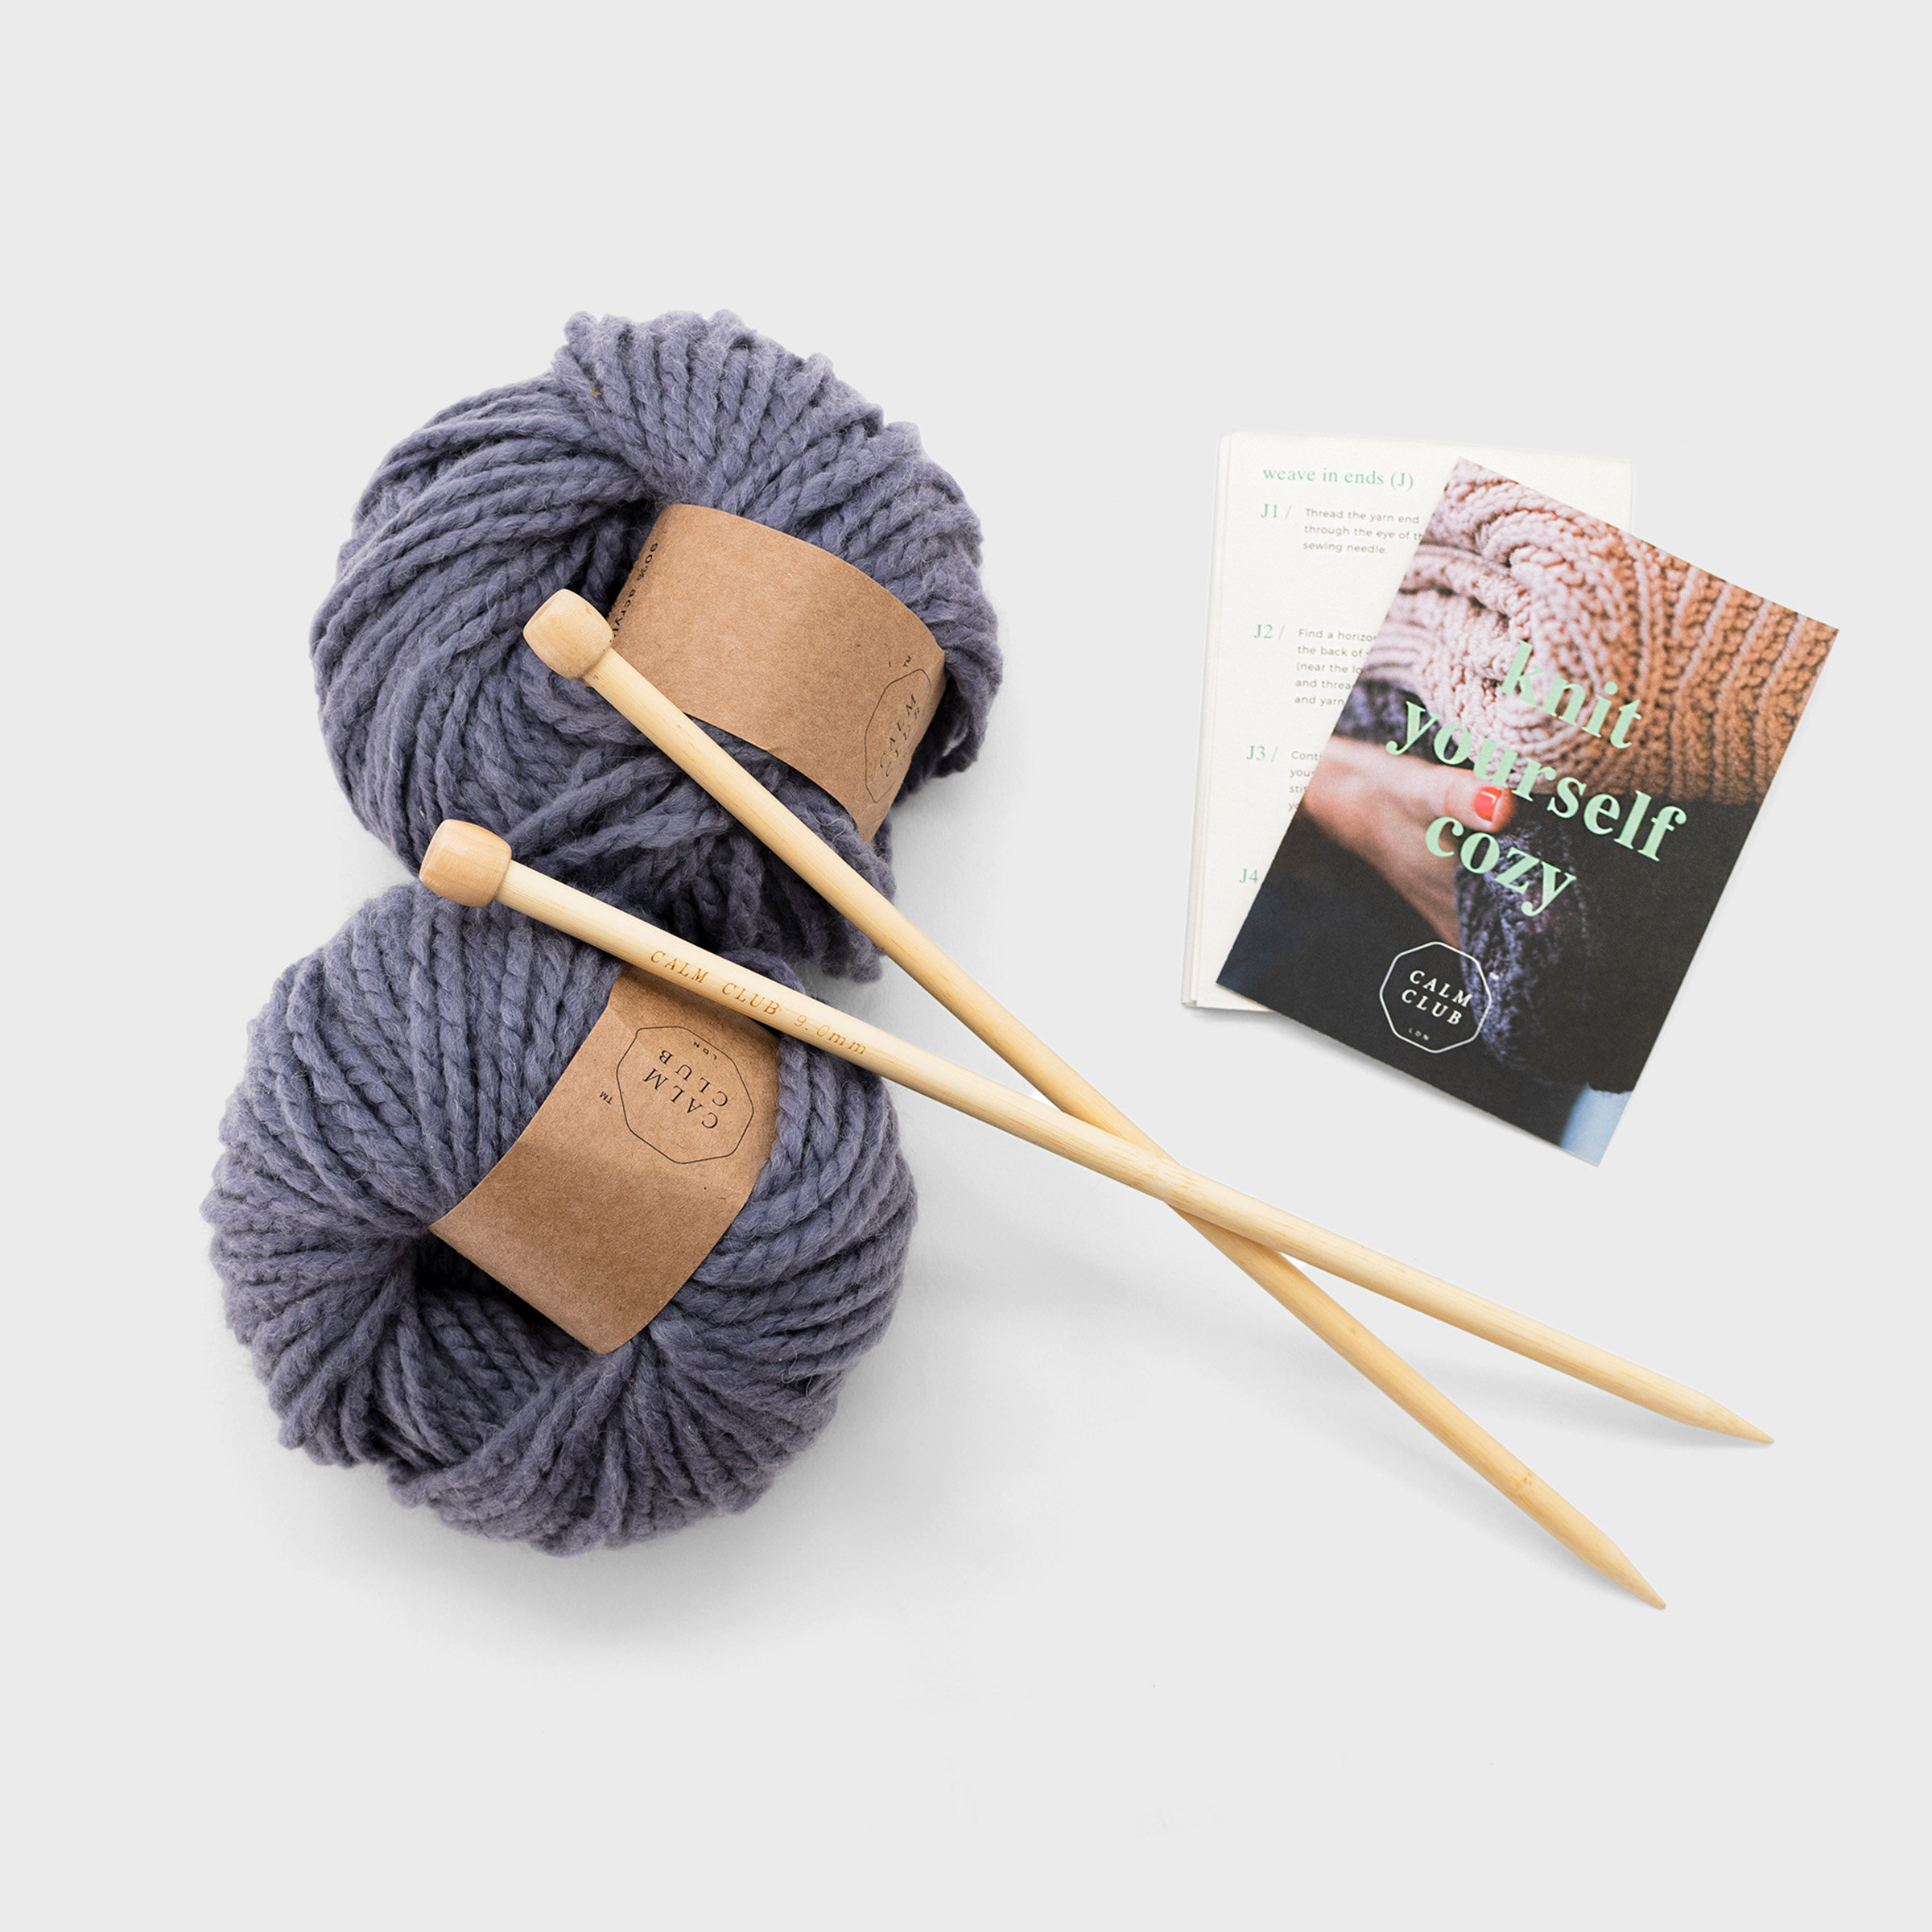 Calm Club Blanket knitting kit